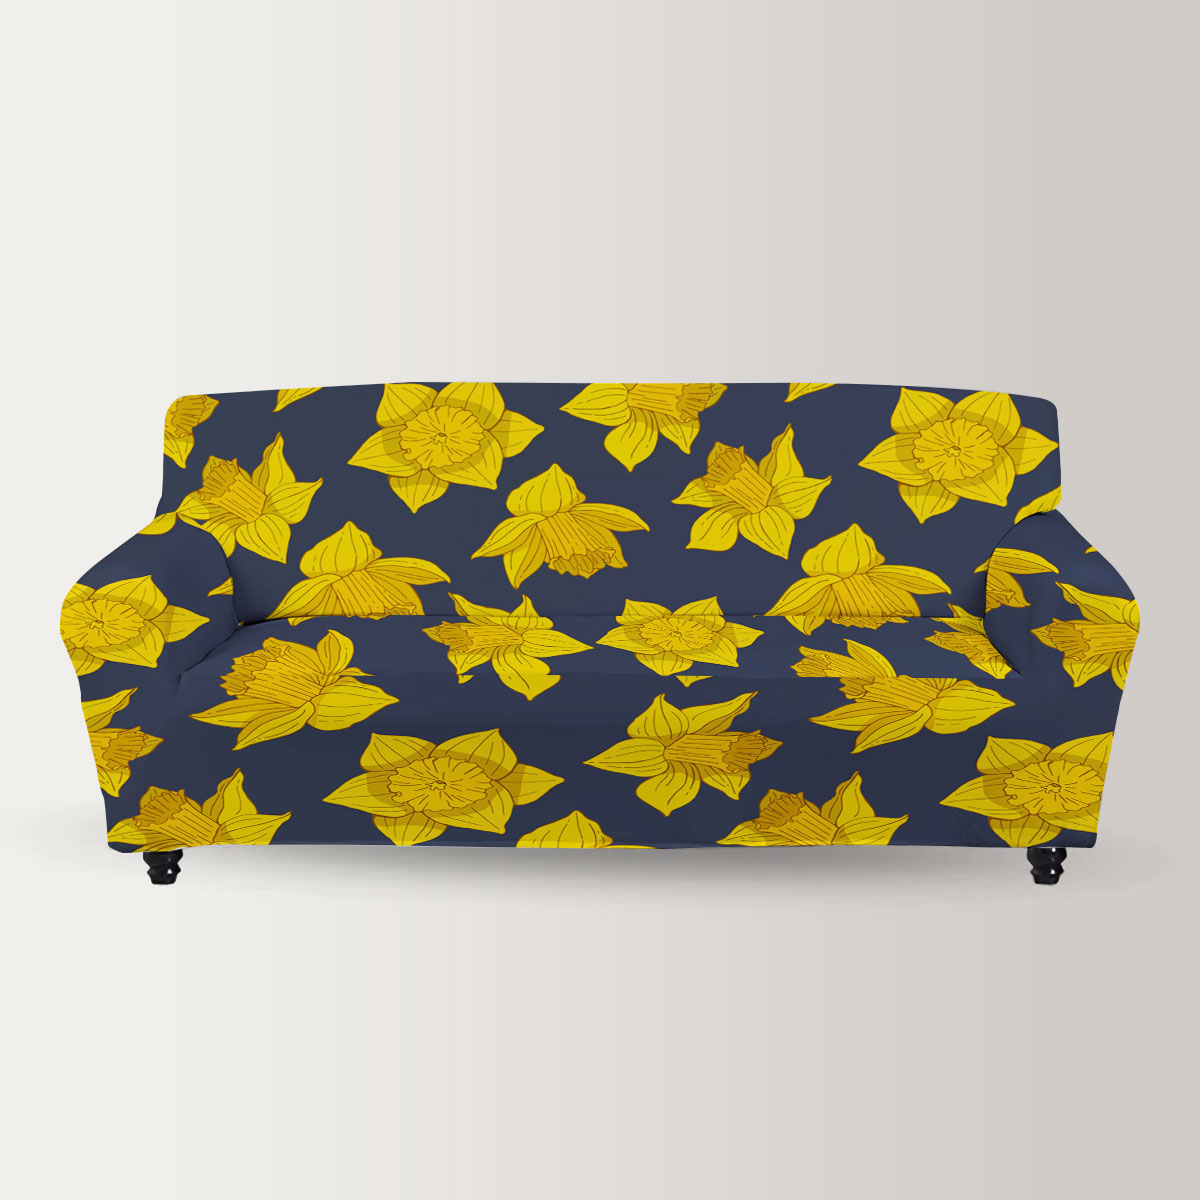 Midnight Daffodils Flower Sofa Cover